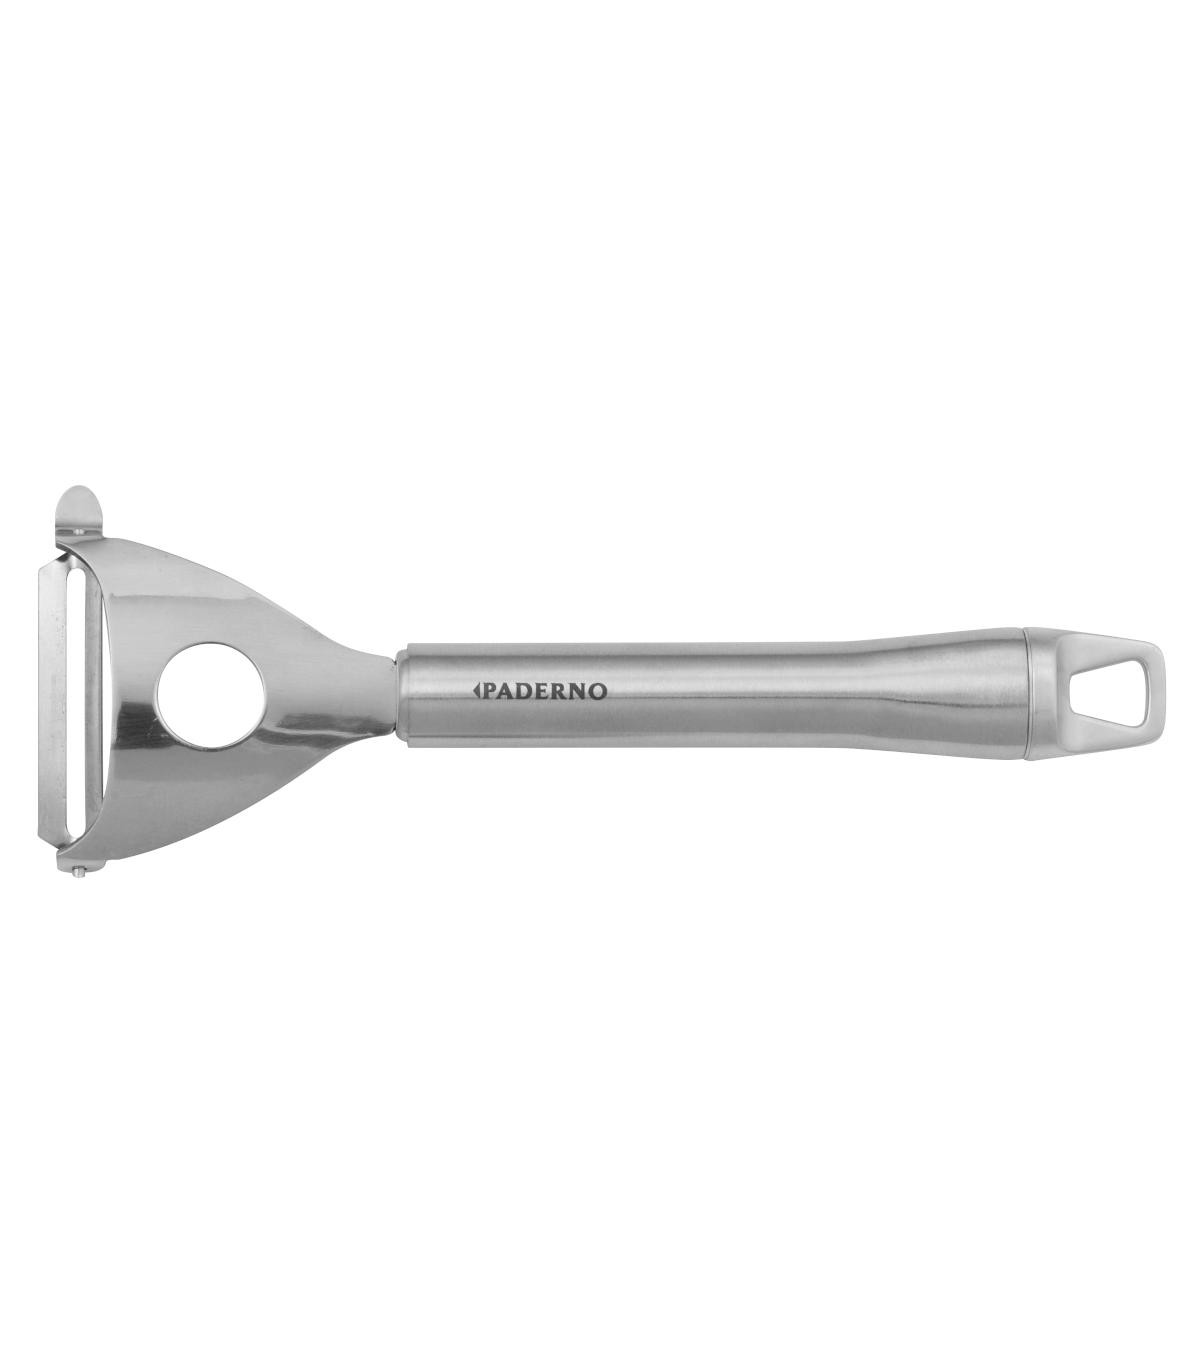 Y-shape swivel peeler stainless steel : Stellinox